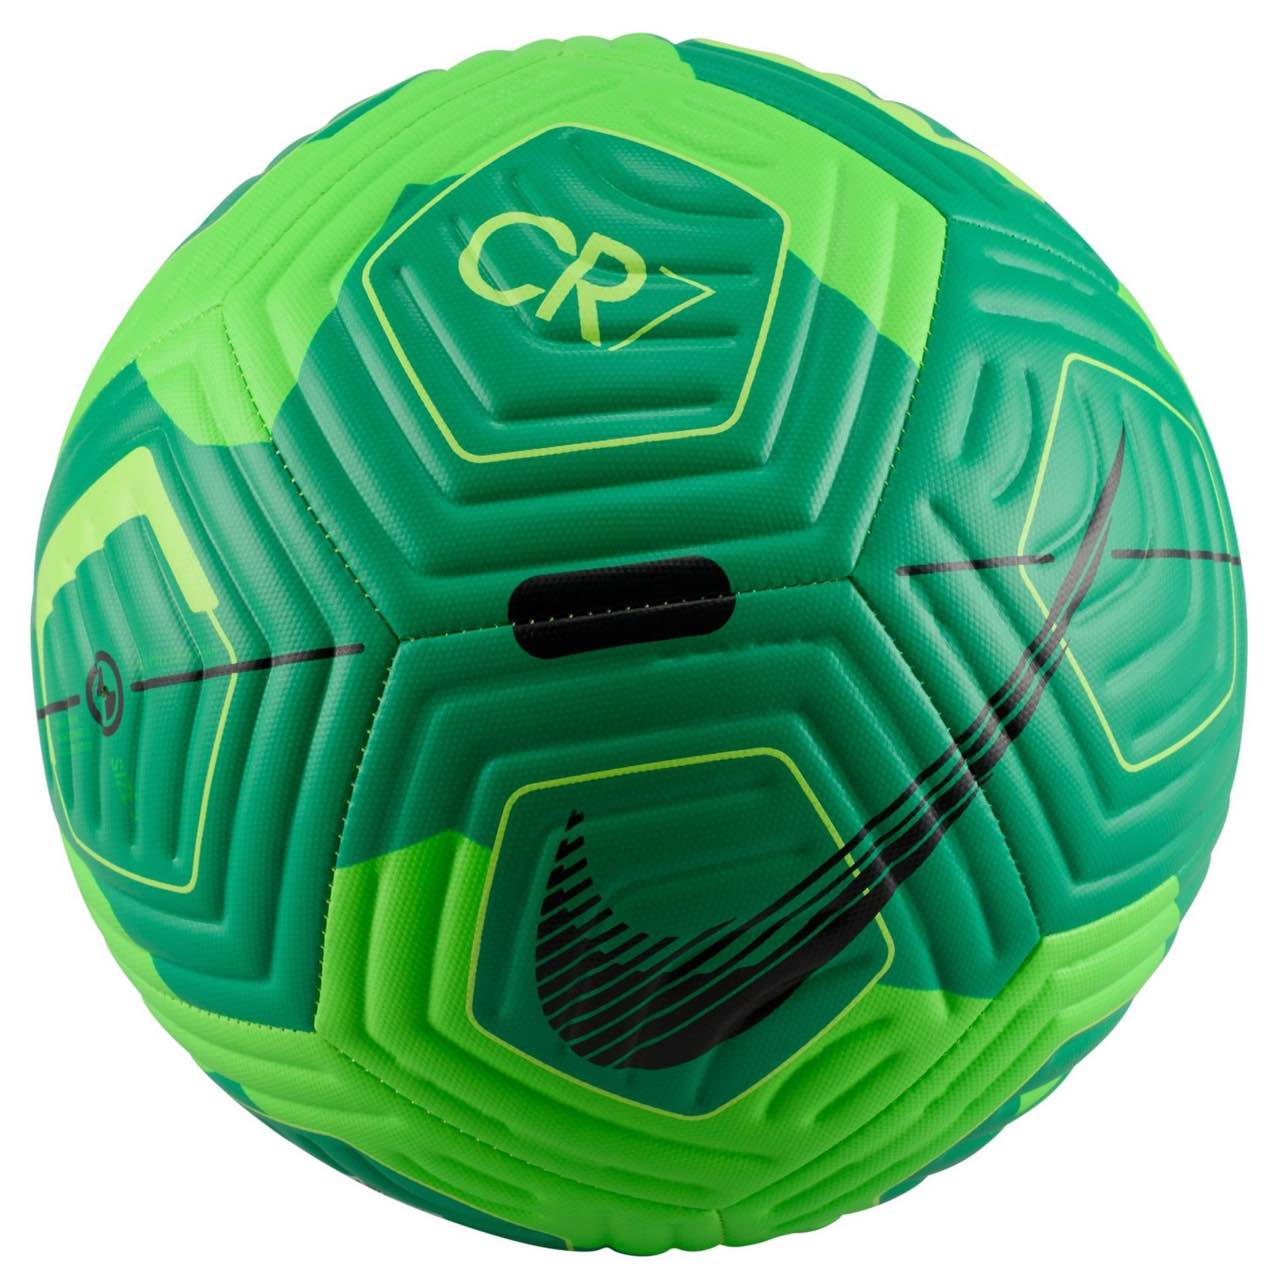 Buy SKY GOLD Premium Brazuca Polyurethane Football with Pump, Size